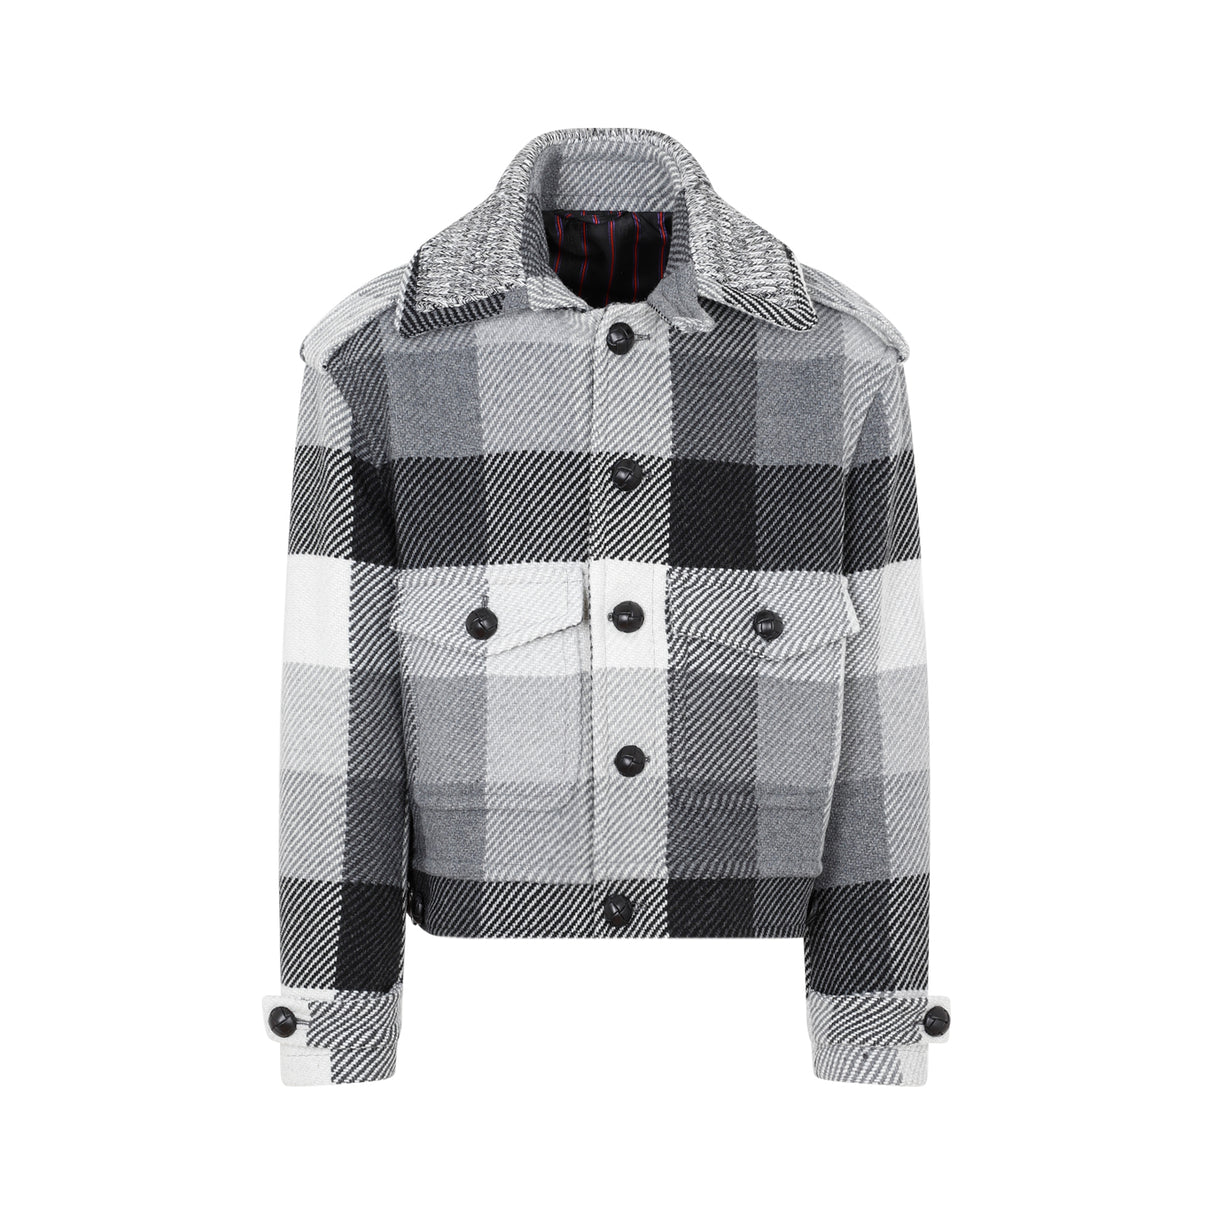 ETRO Premium Grey Wool Jacket for Men - FW23 Collection